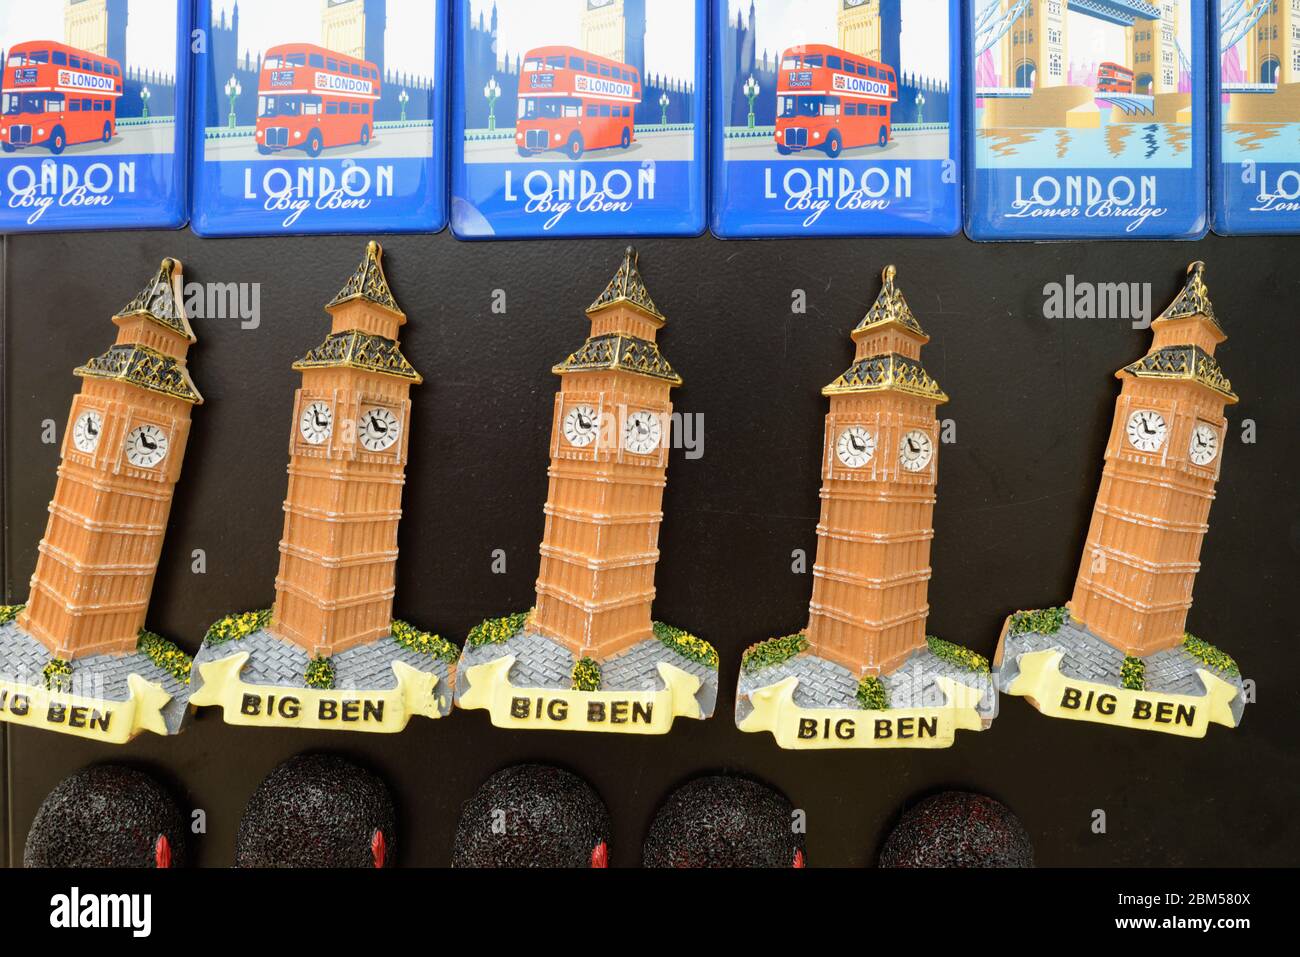 Big ben Tourist souvenir Magnets in vendita in negozio di souvenir o Stall souvenir Londra Inghilterra UK Foto Stock